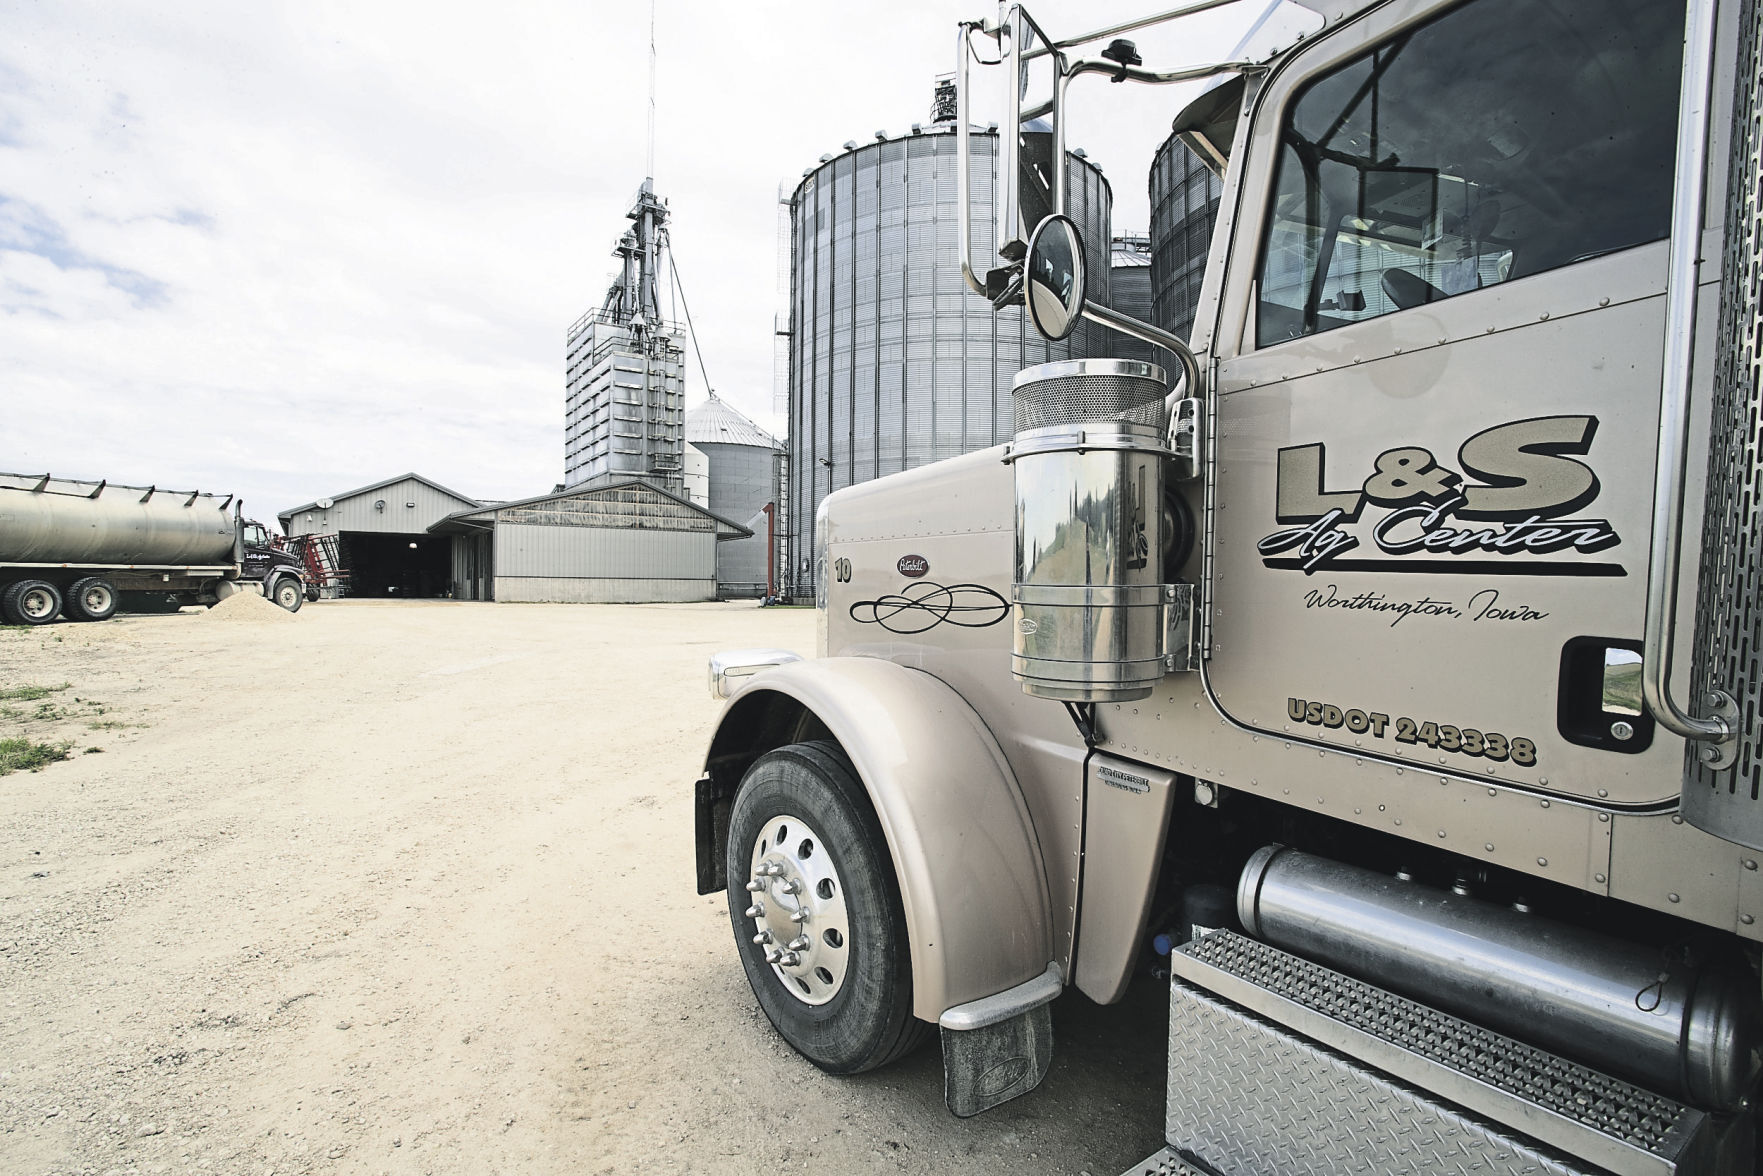 Trucks haul in grain at L&S Ag Center.    PHOTO CREDIT: Stephen Gassman